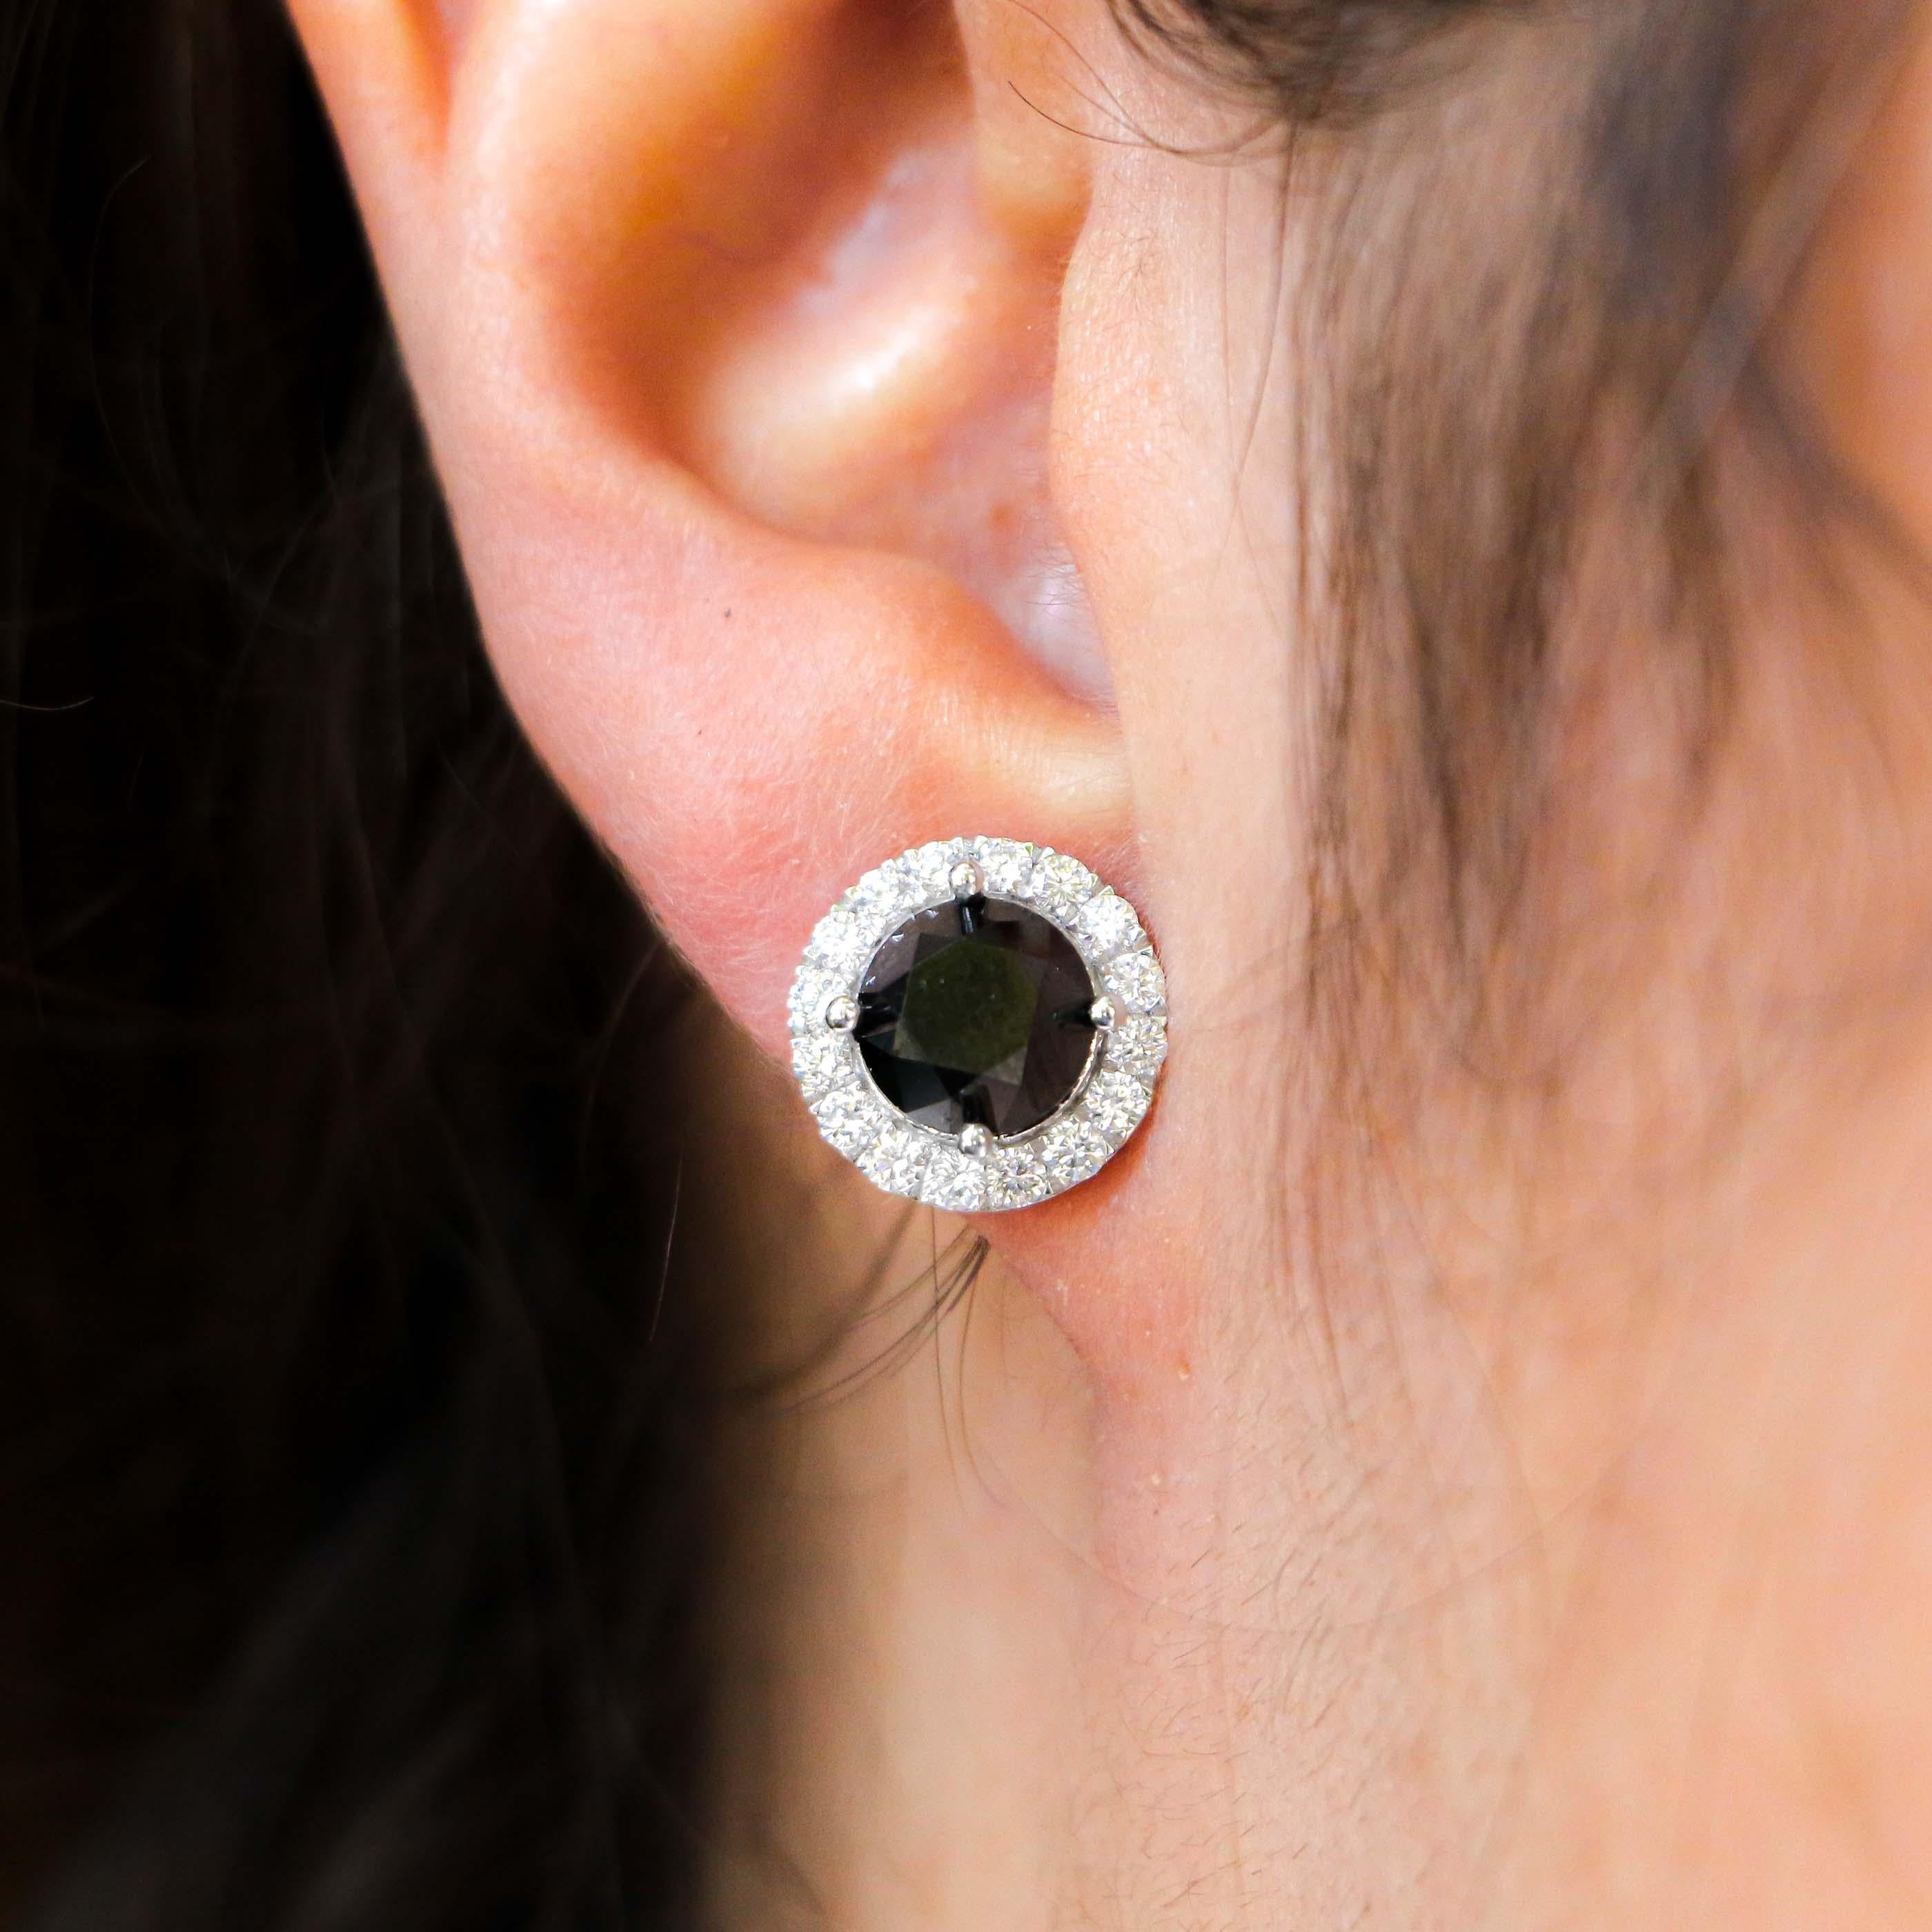 4 carat black diamond earrings